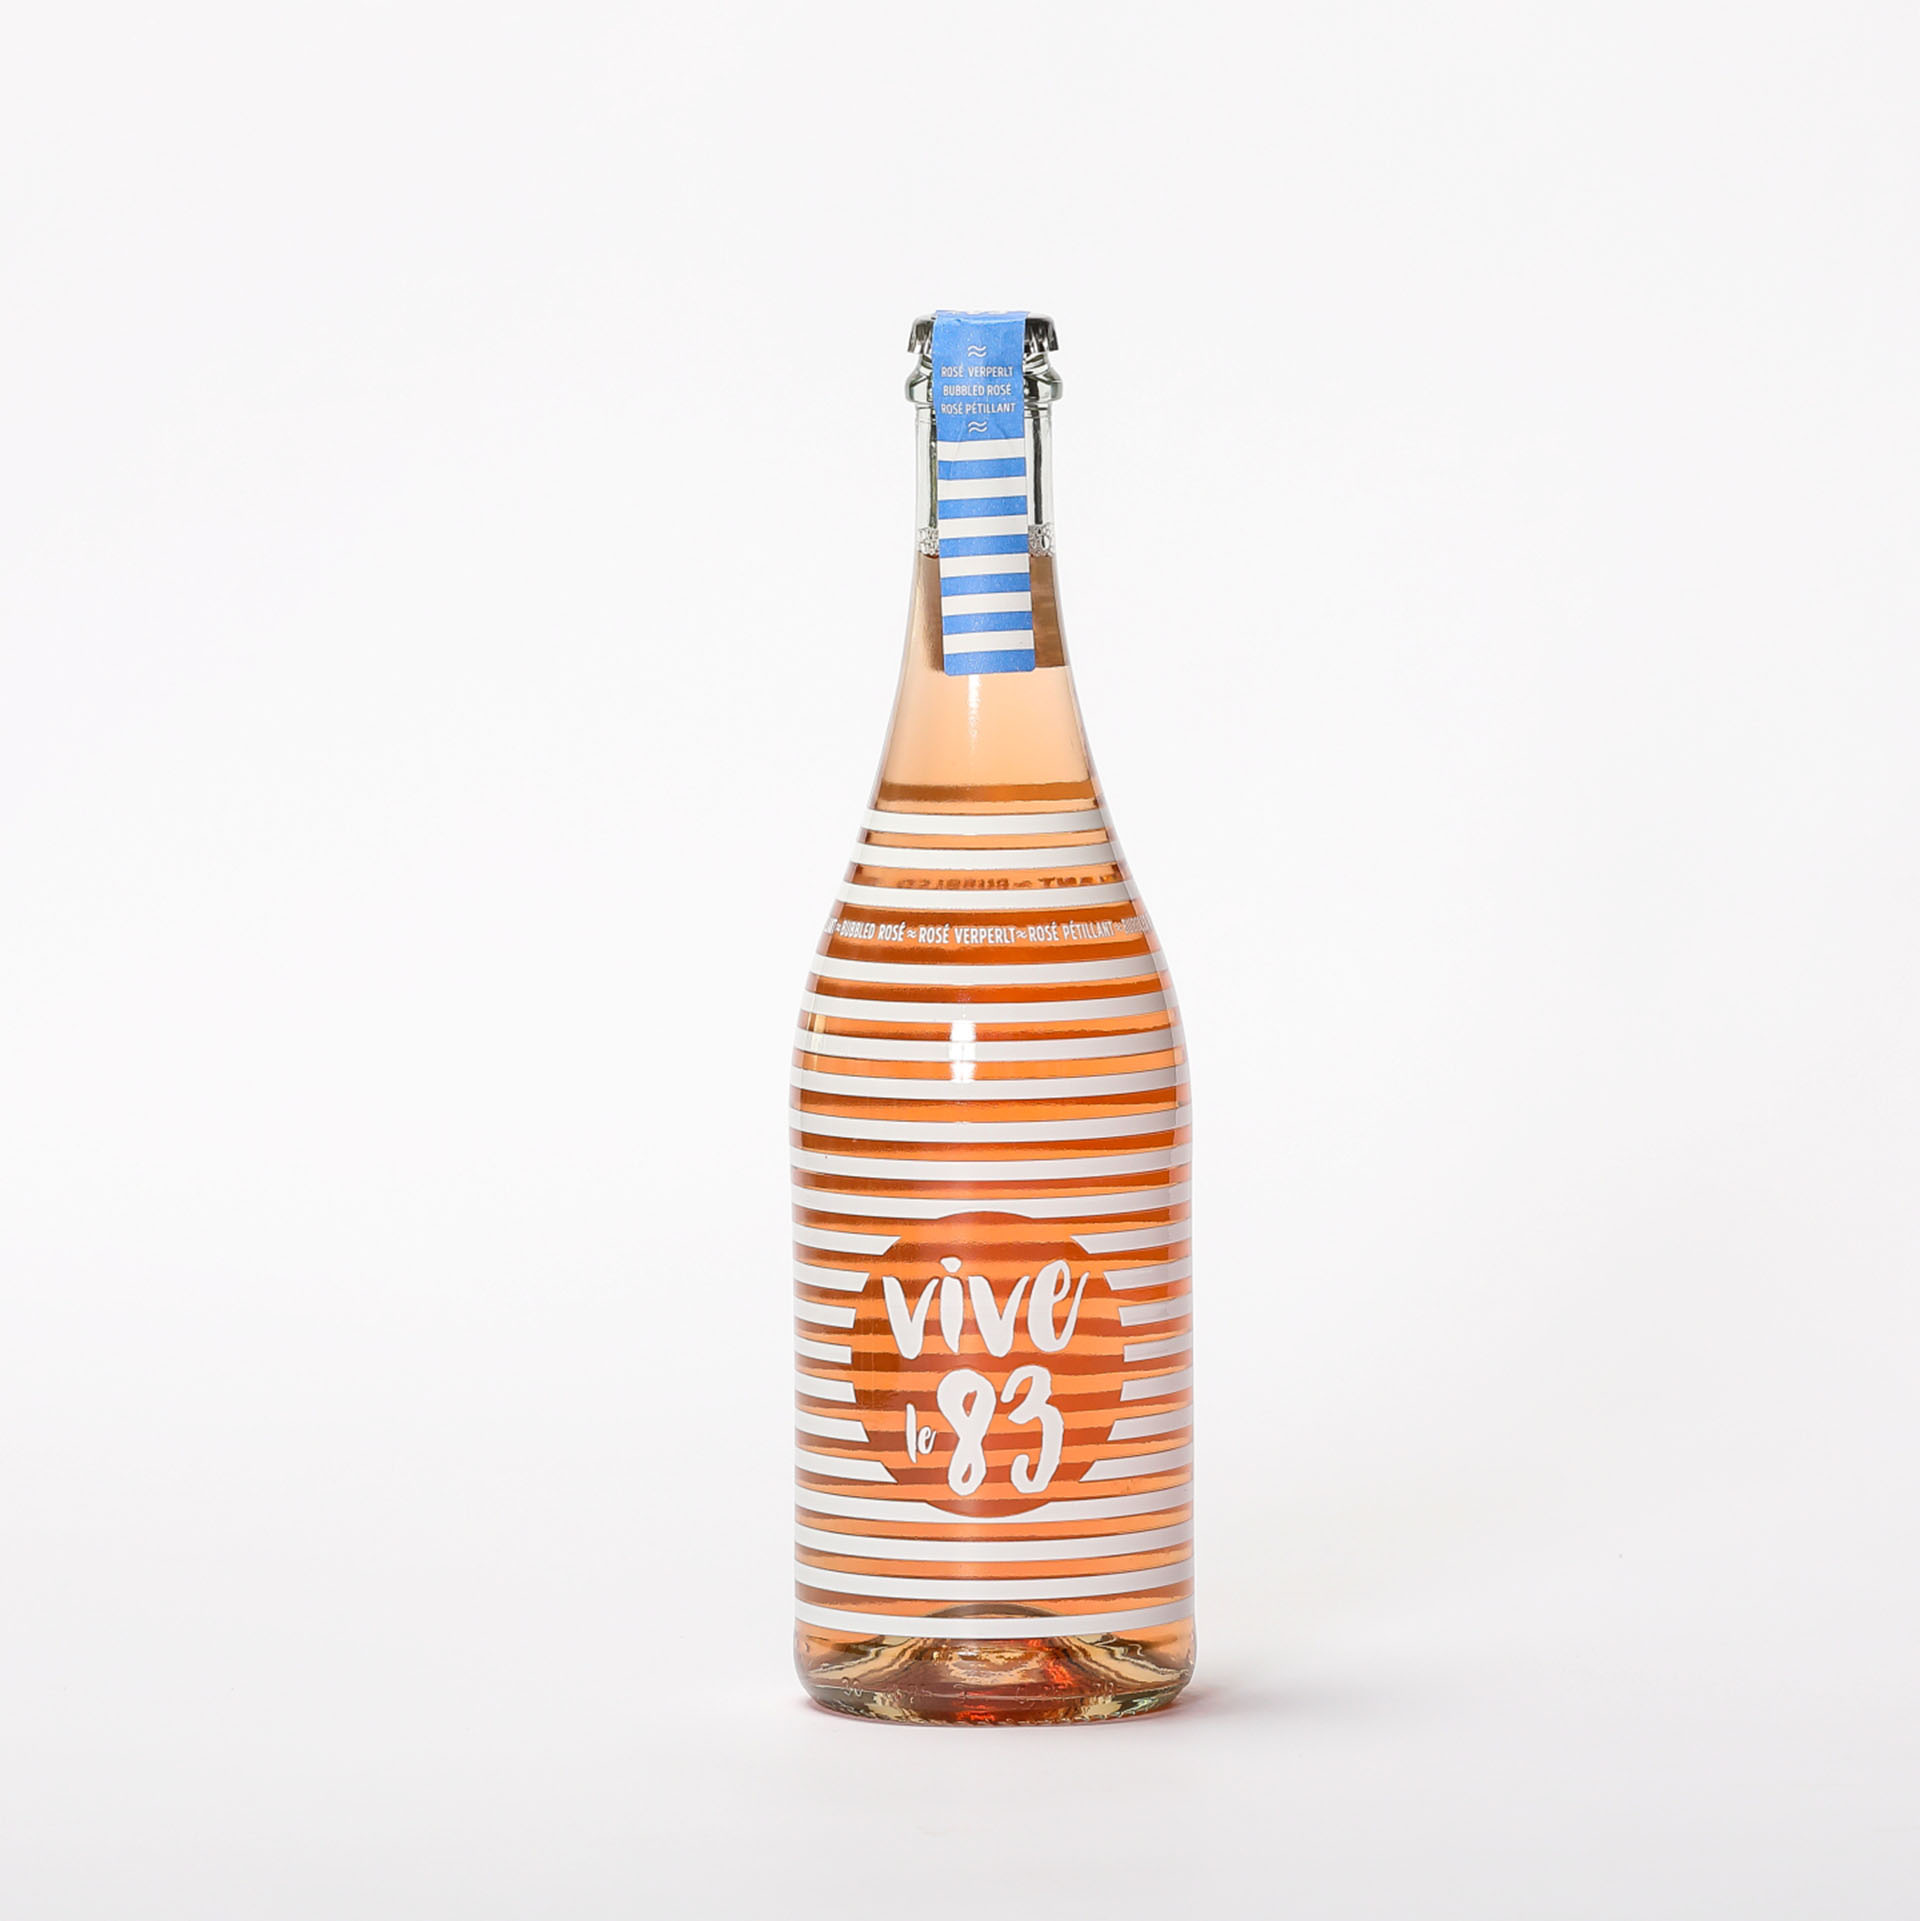 Produktbild VIVE le 83 Perlwein Rosé 2019 - Weingut Salwey| DINZLER Kaffeerösterei